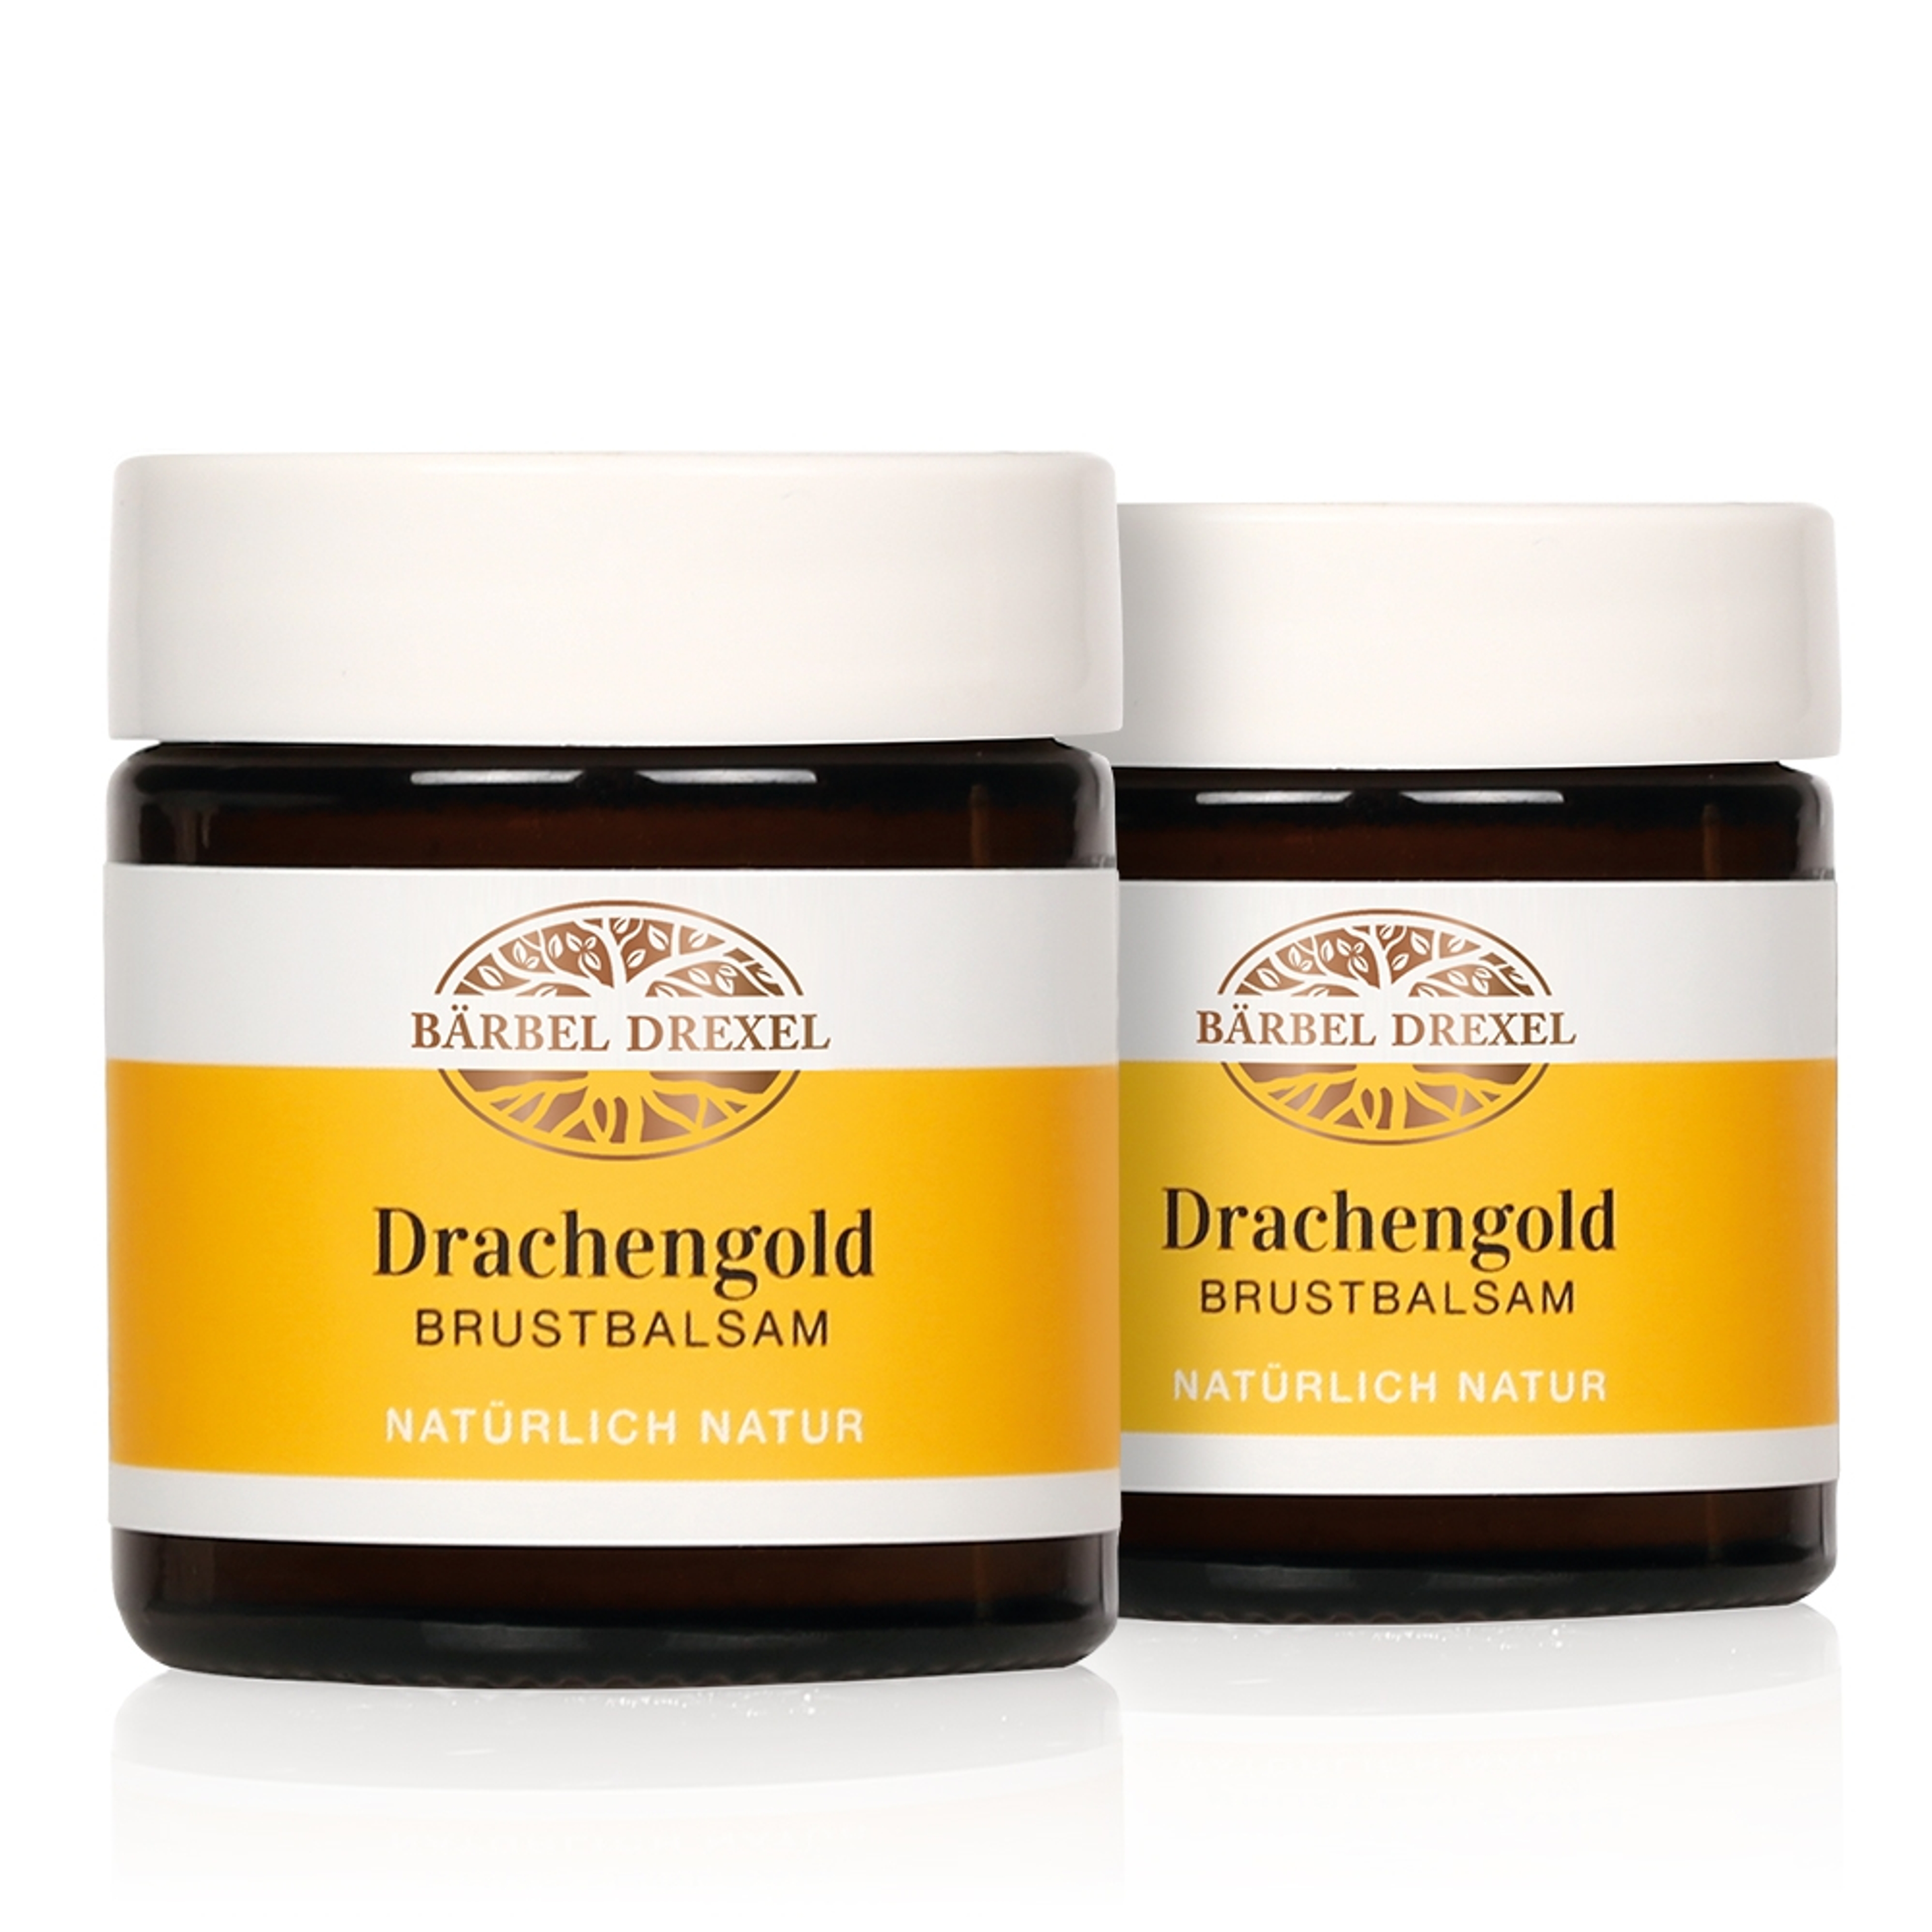 Duo Drachengold Brustbalsam, 50 ml 